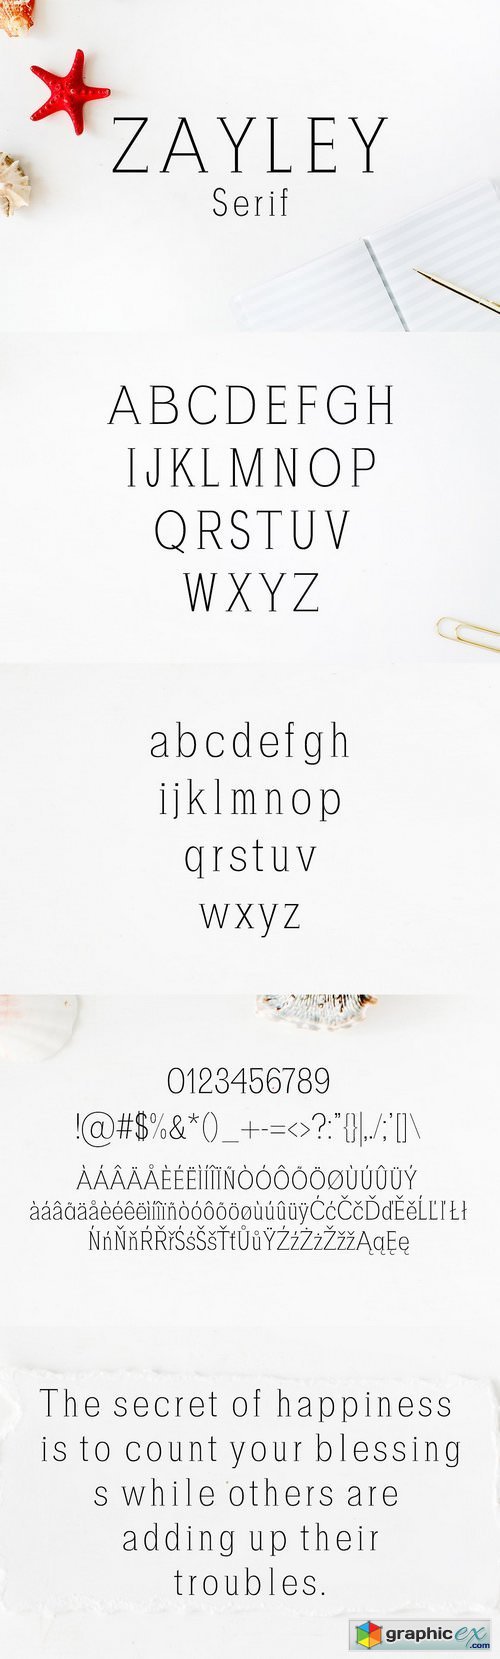 Zayley Serif Regular Font